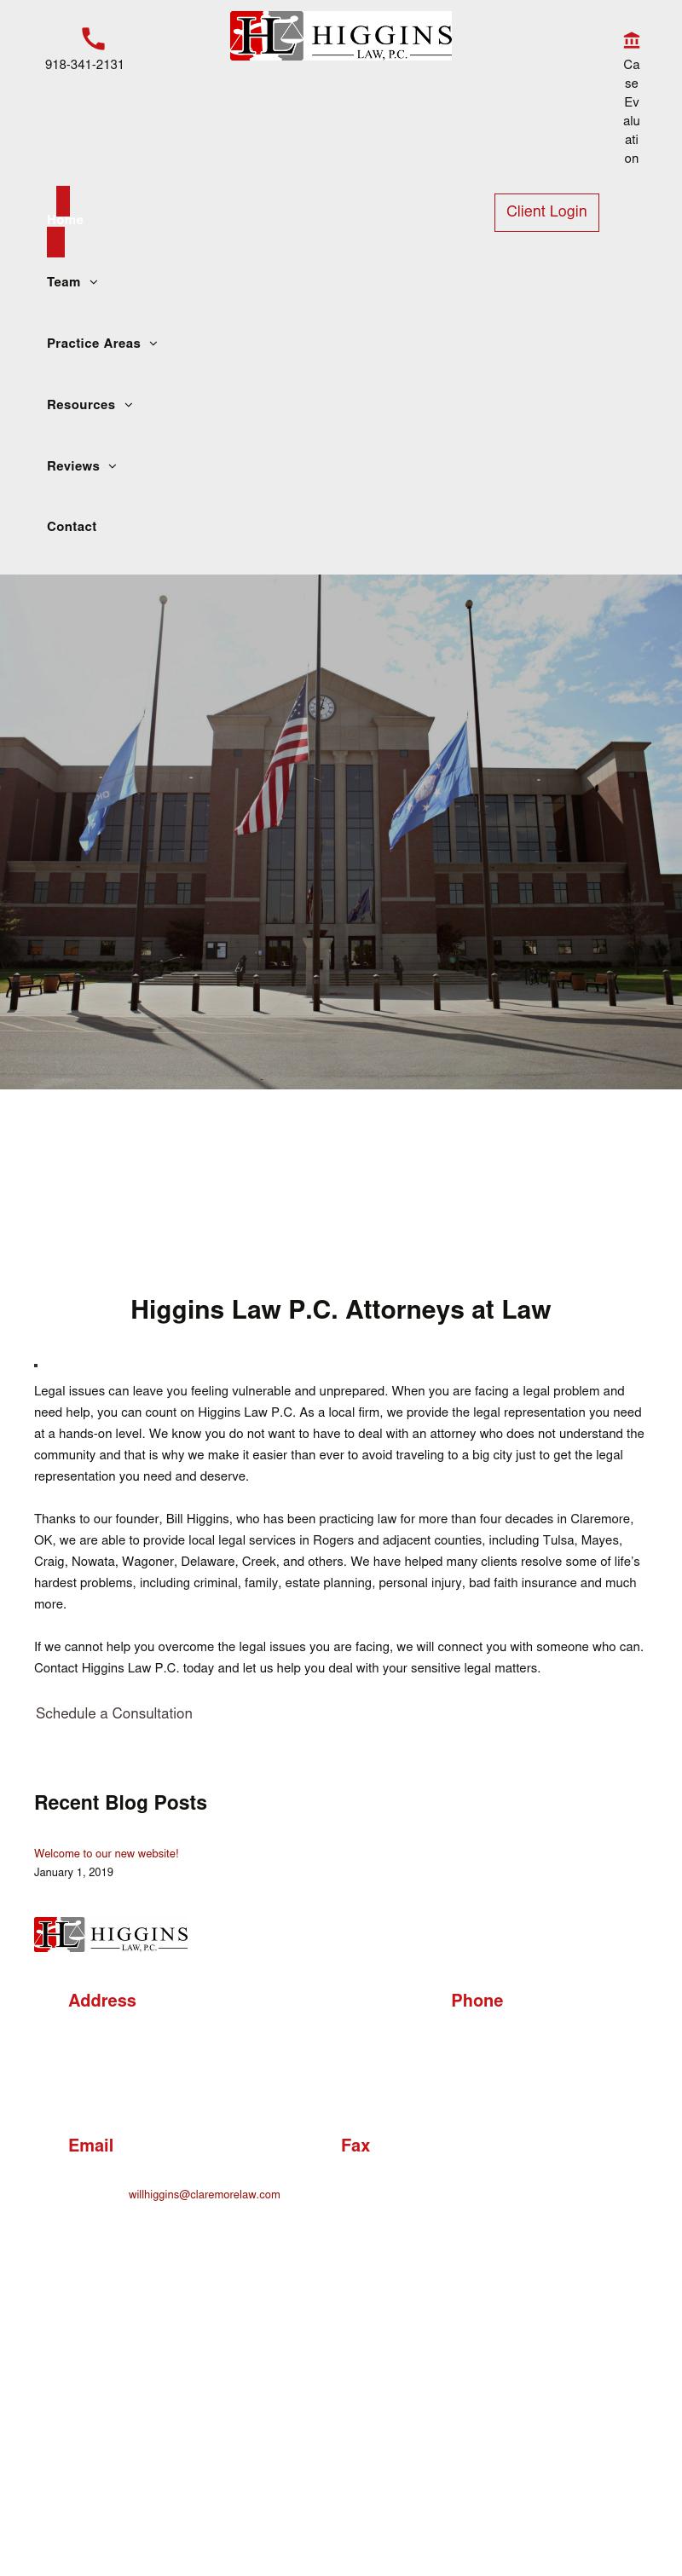 Higgins Law, P.C. - Claremore OK Lawyers